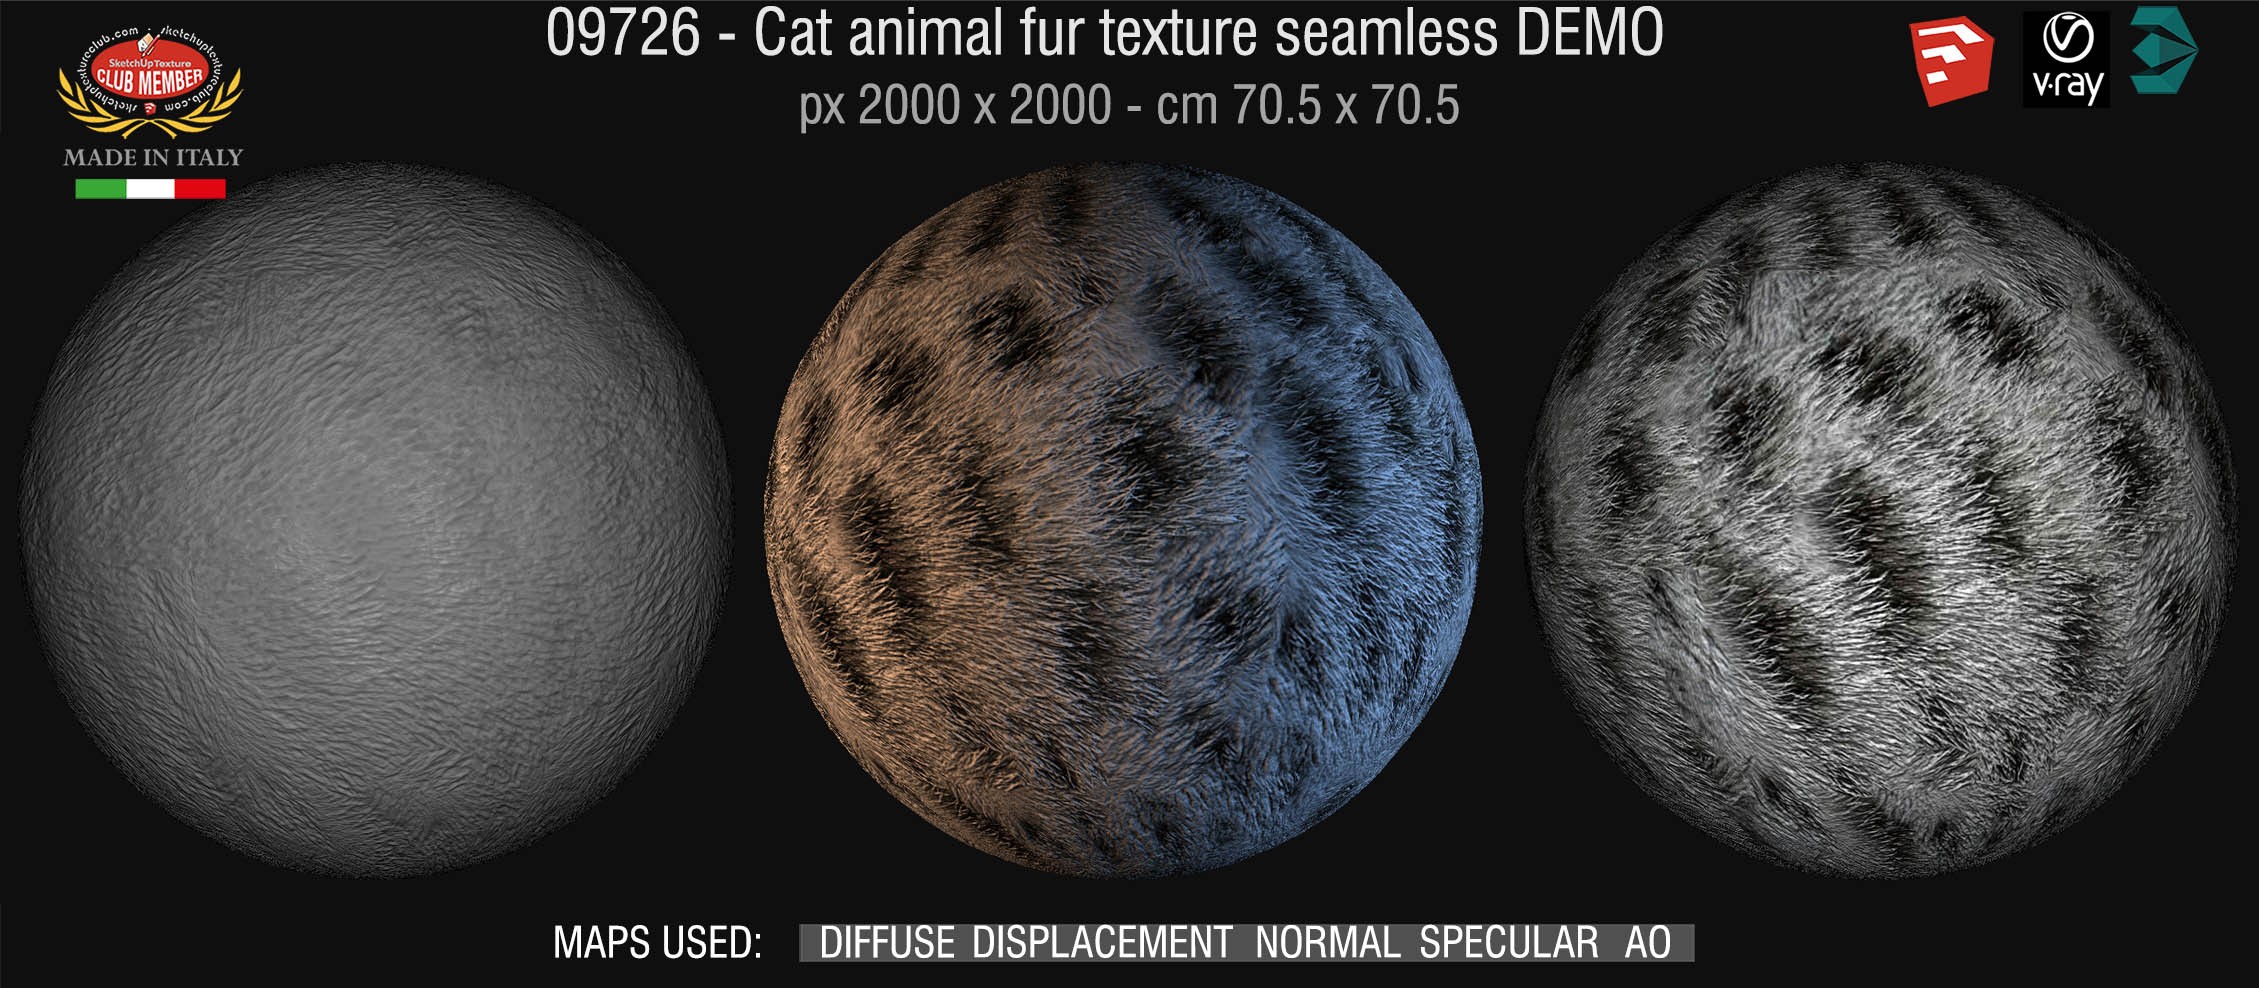 09726 HR Cat animal fur texture + maps DEMO